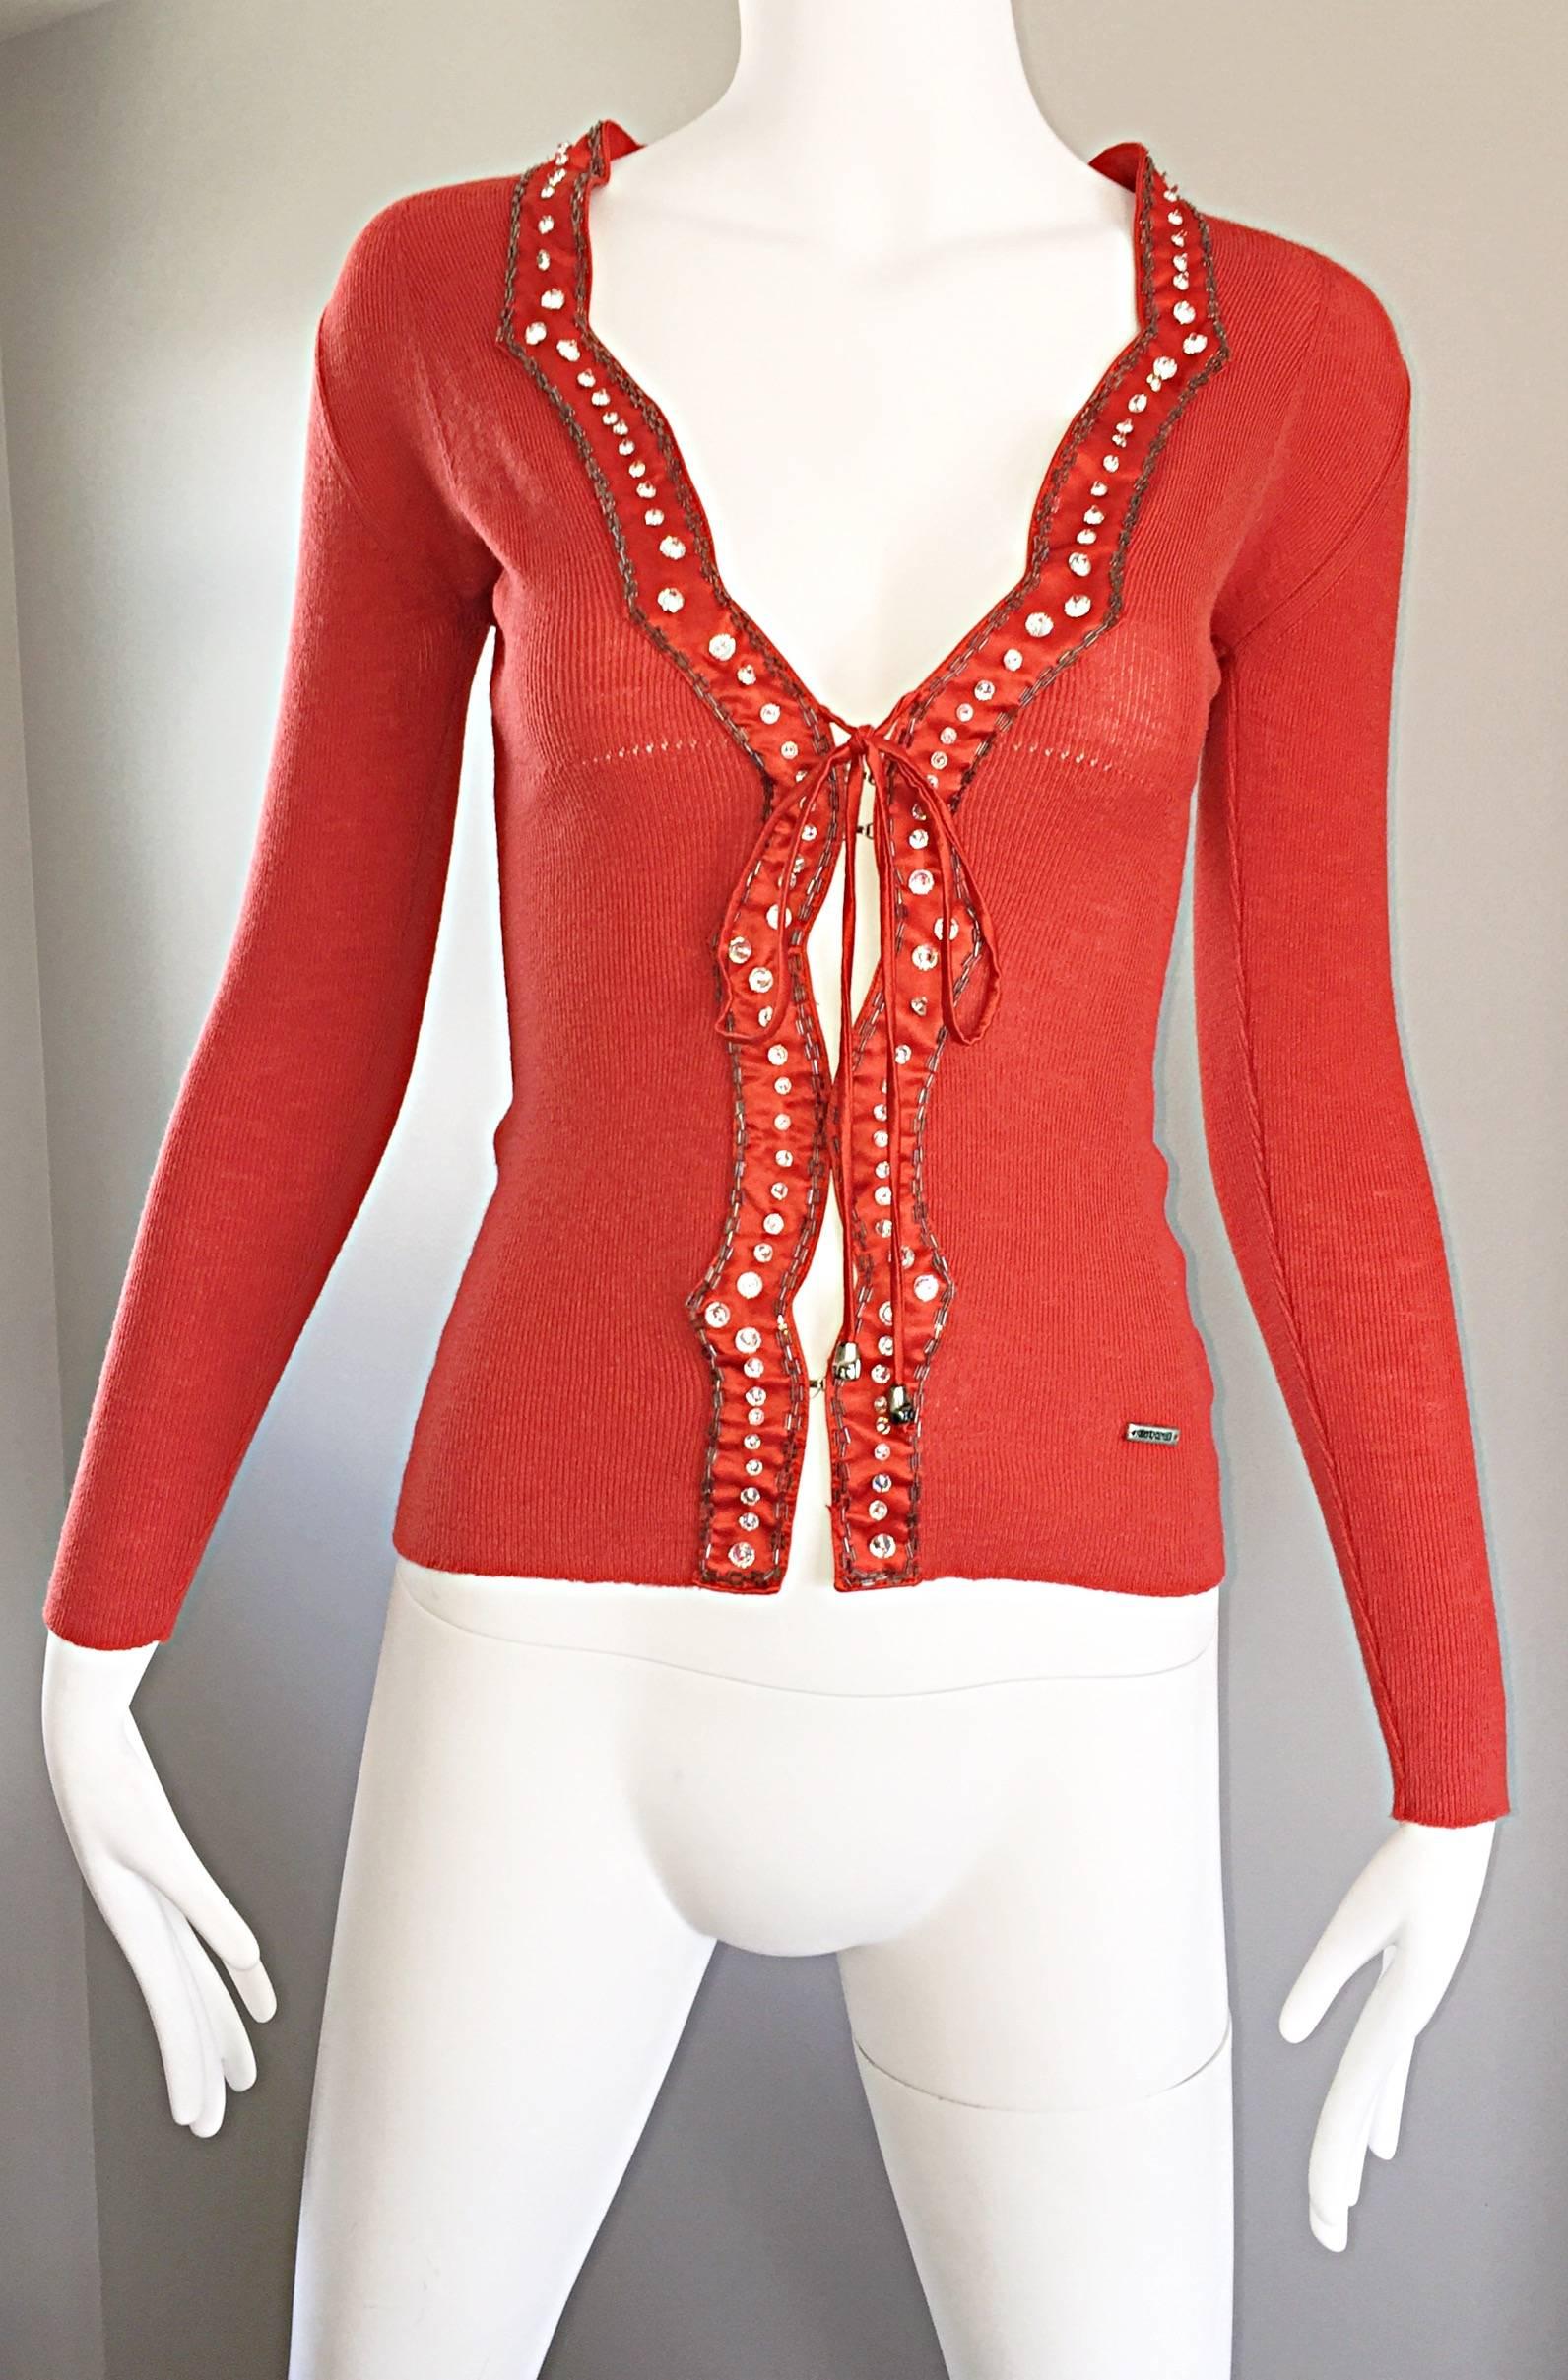 Red Roberto Cavalli 1990s Burnt Orange Rhinestone + Beaded Vintage Knit Cardigan Top